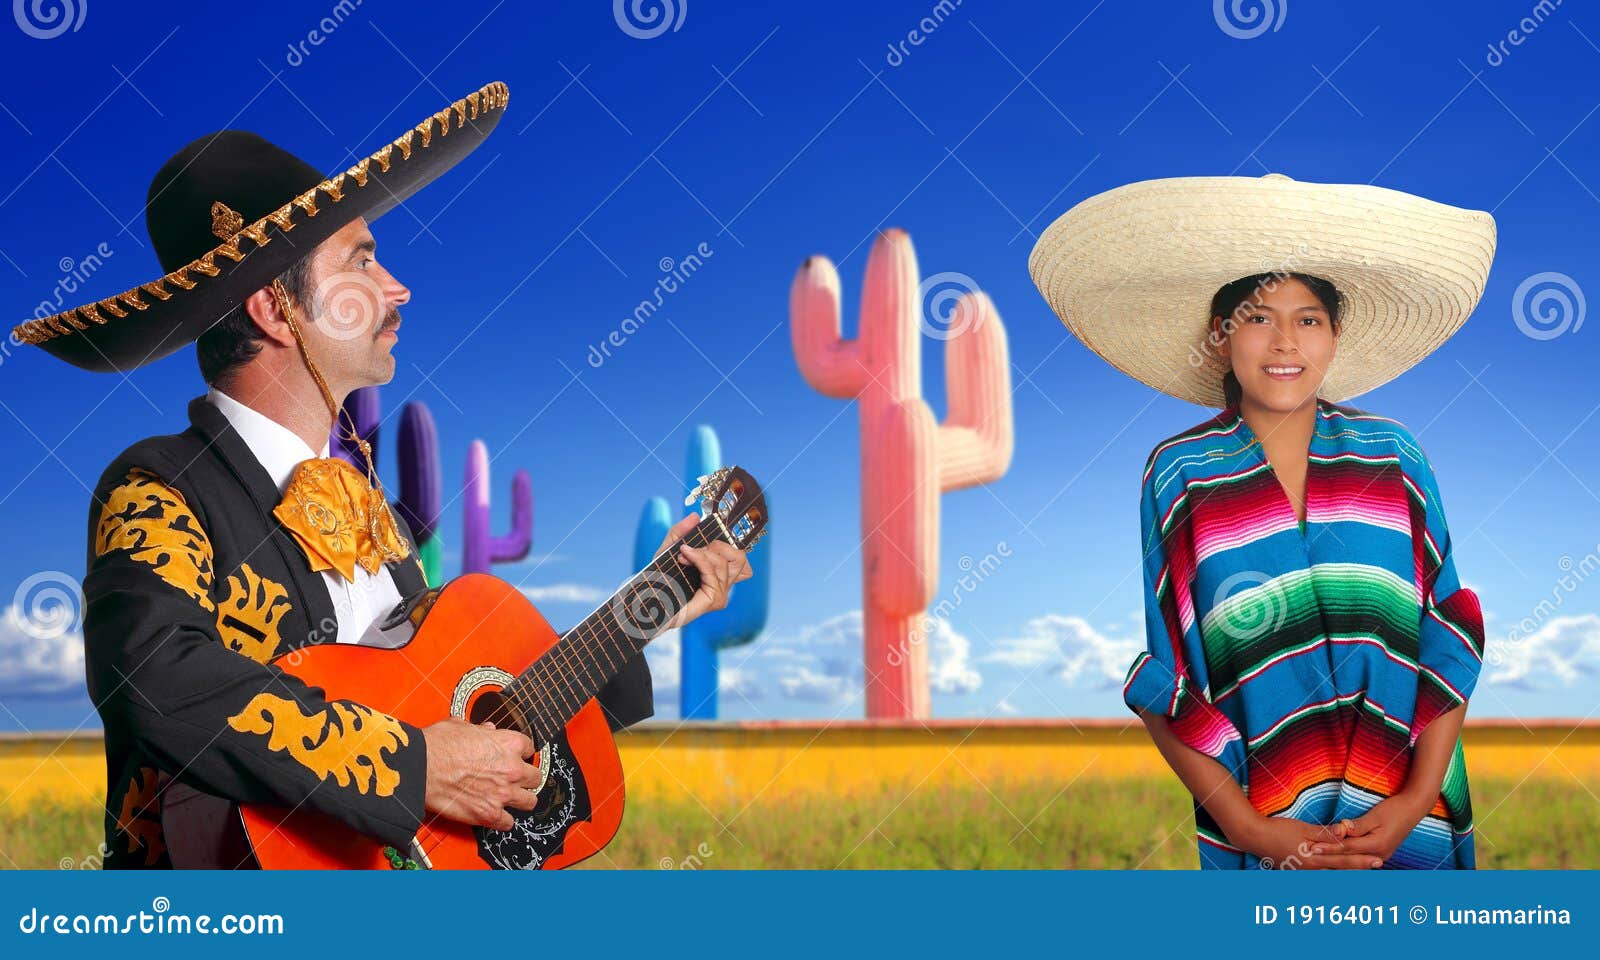 mariachi charro playing guitar mexican poncho girl